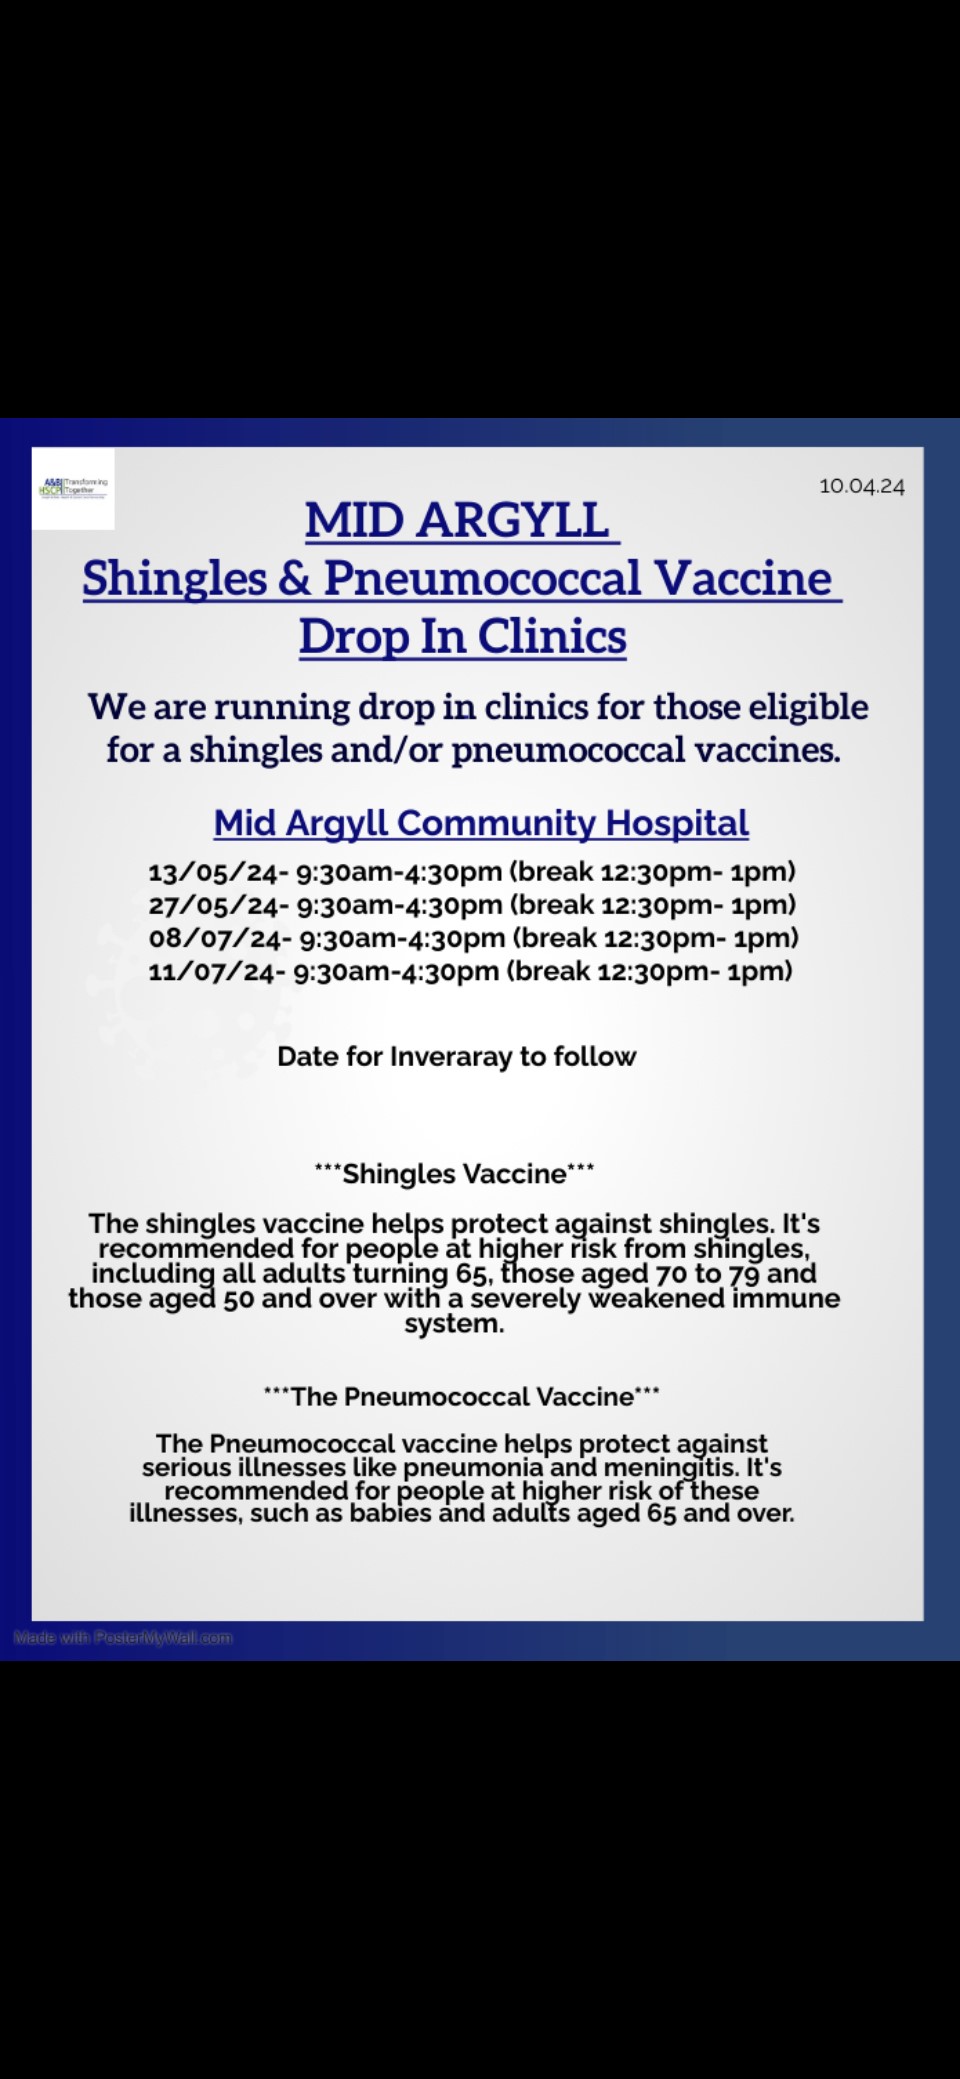 Shingles & Pneumoccal Vaccine Drop In Clinics